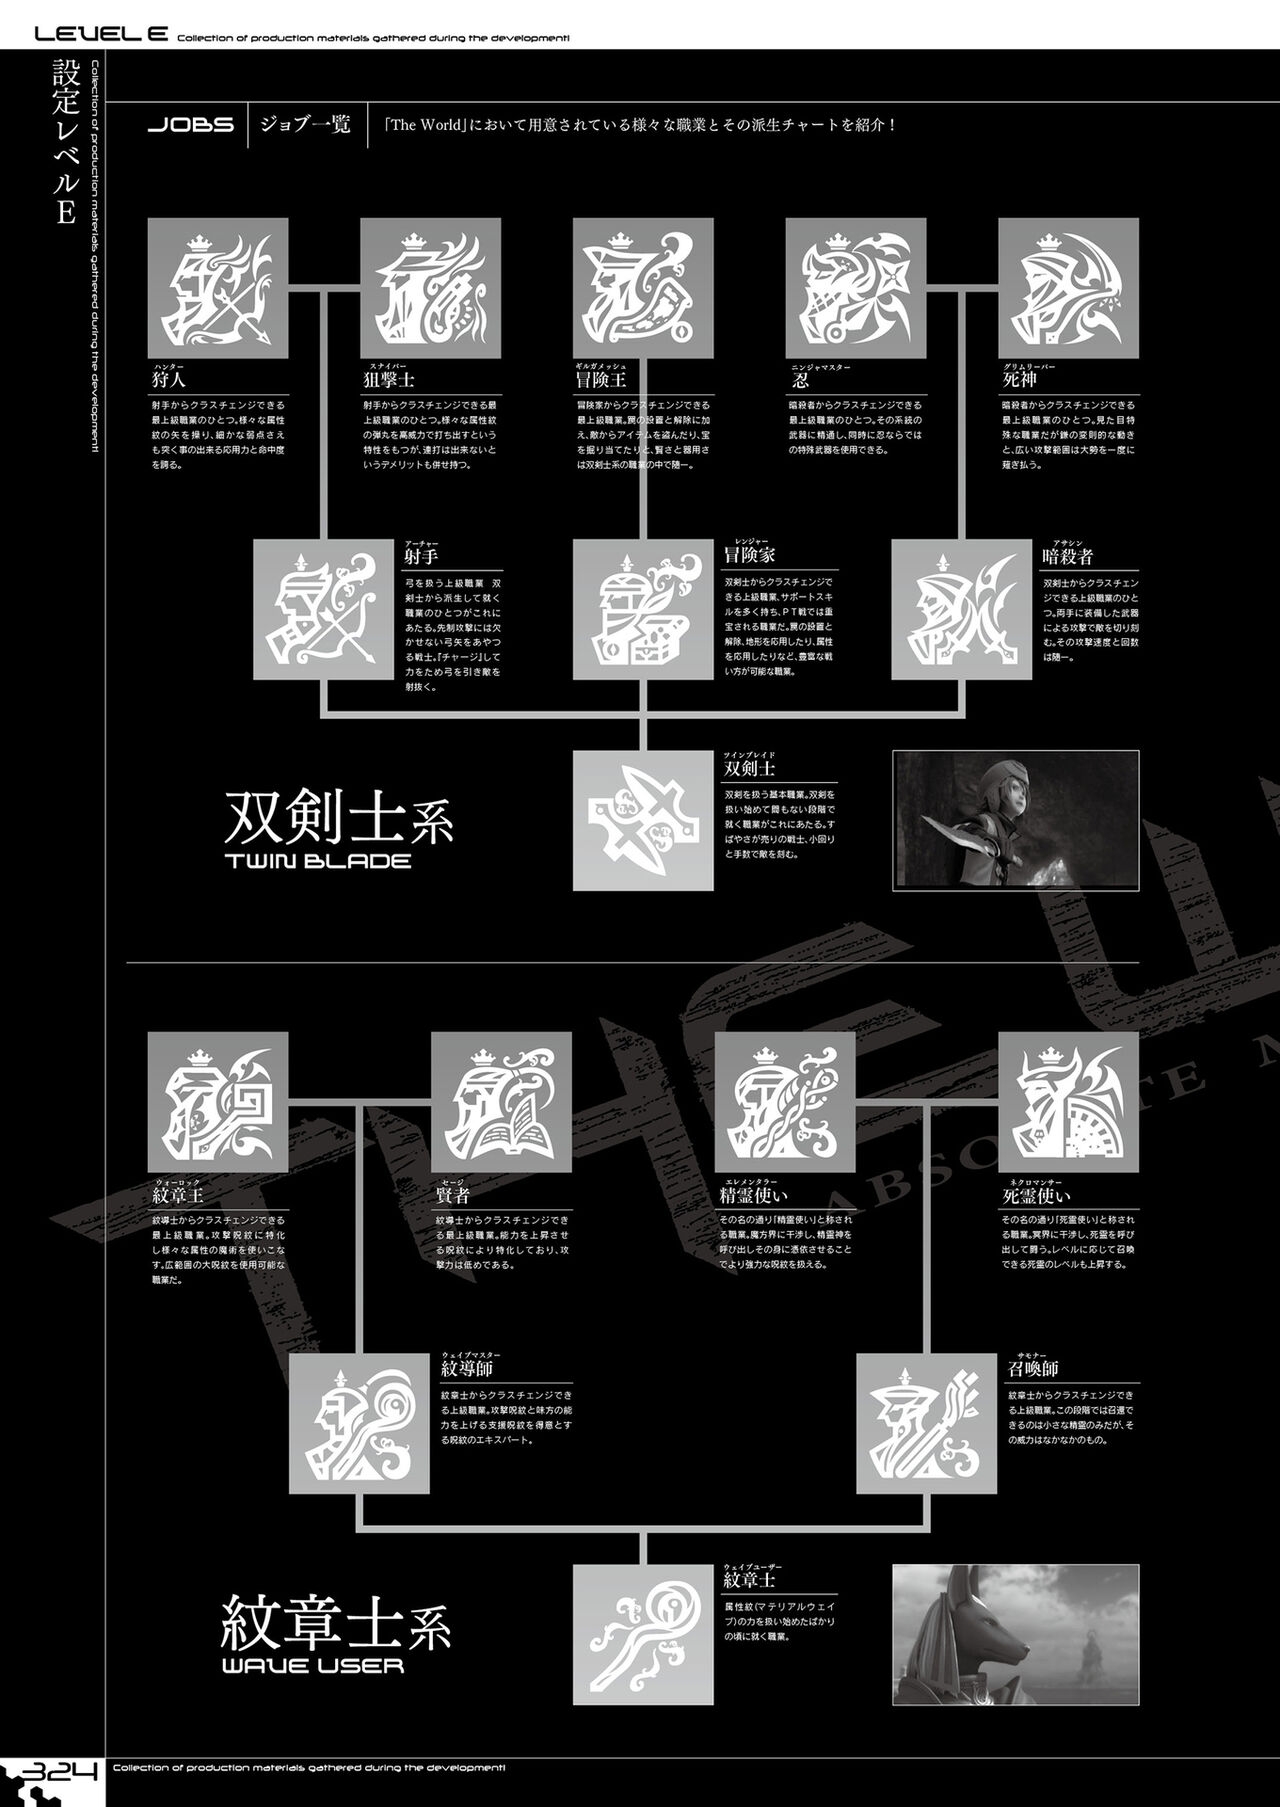 Dot Hack Sekai-no Muko ni  +Versus Complete Set  Documentation .hack //Archives _ 05 326